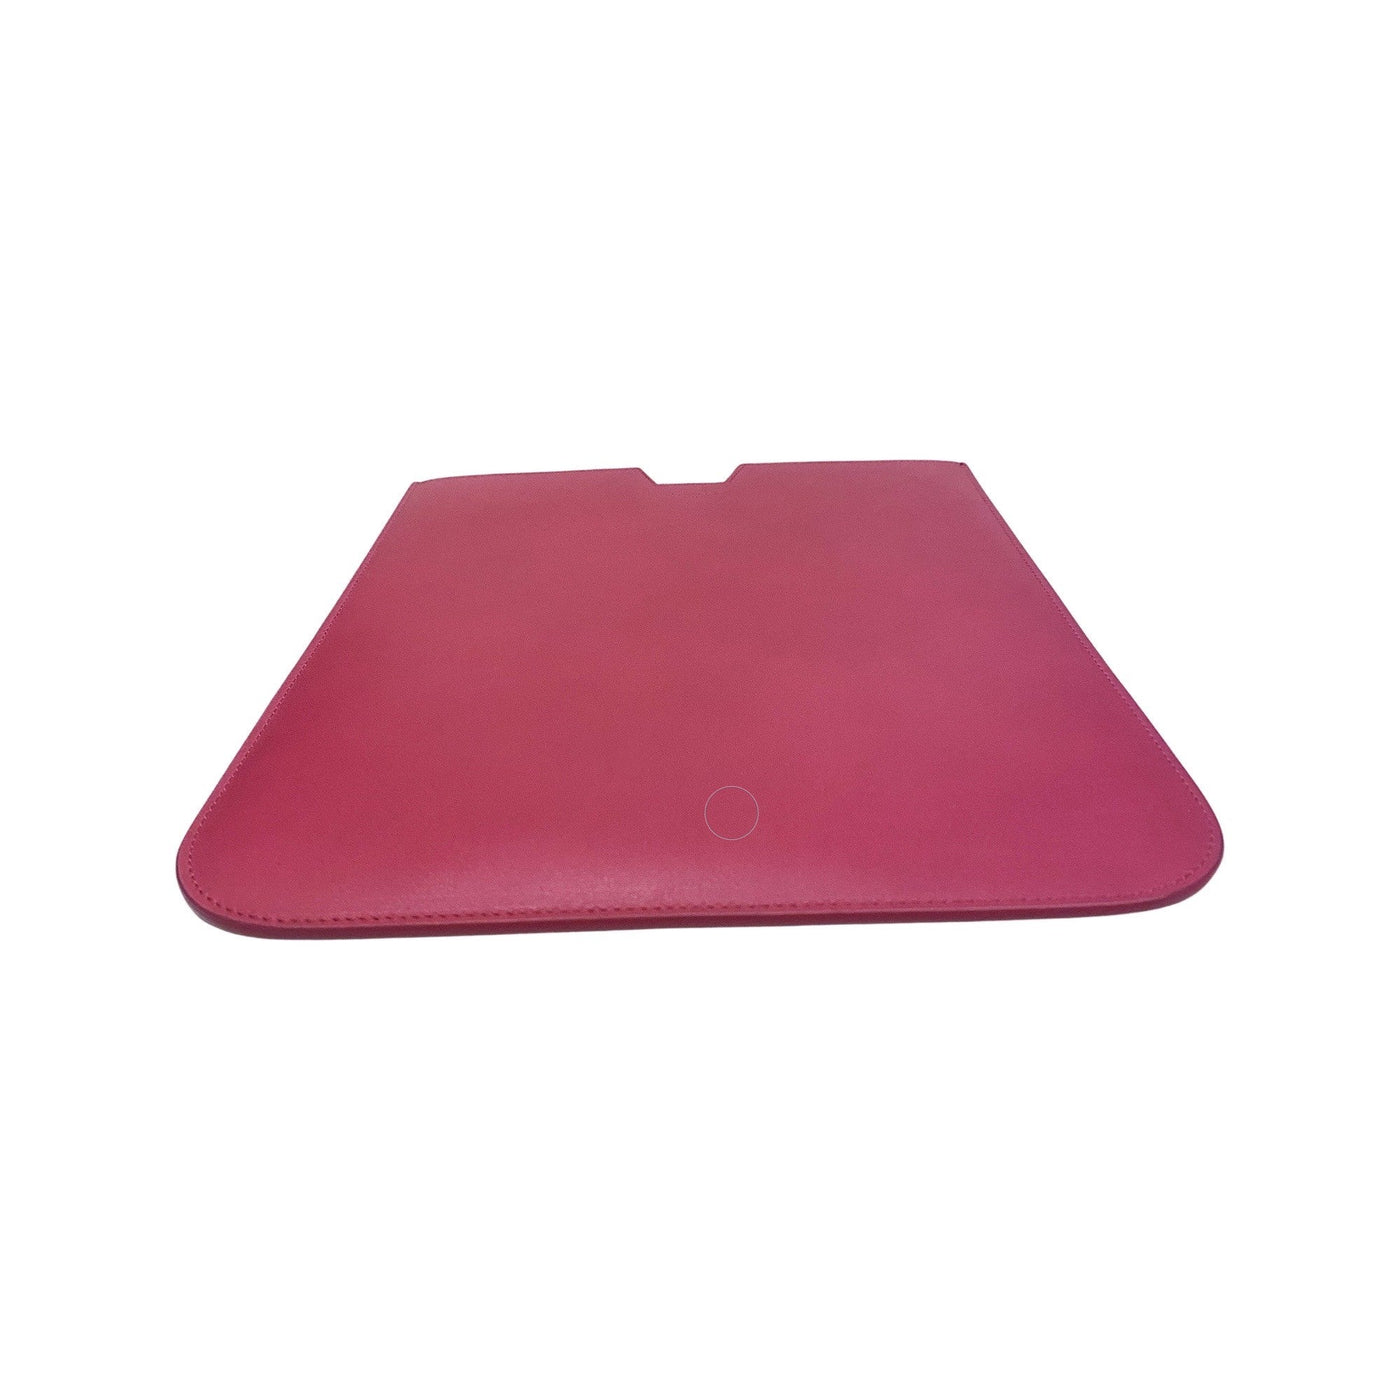 Saint Laurent Paris Logo Smooth Pink Calfskin Leather iPad Sleeve - LUXURYMRKT